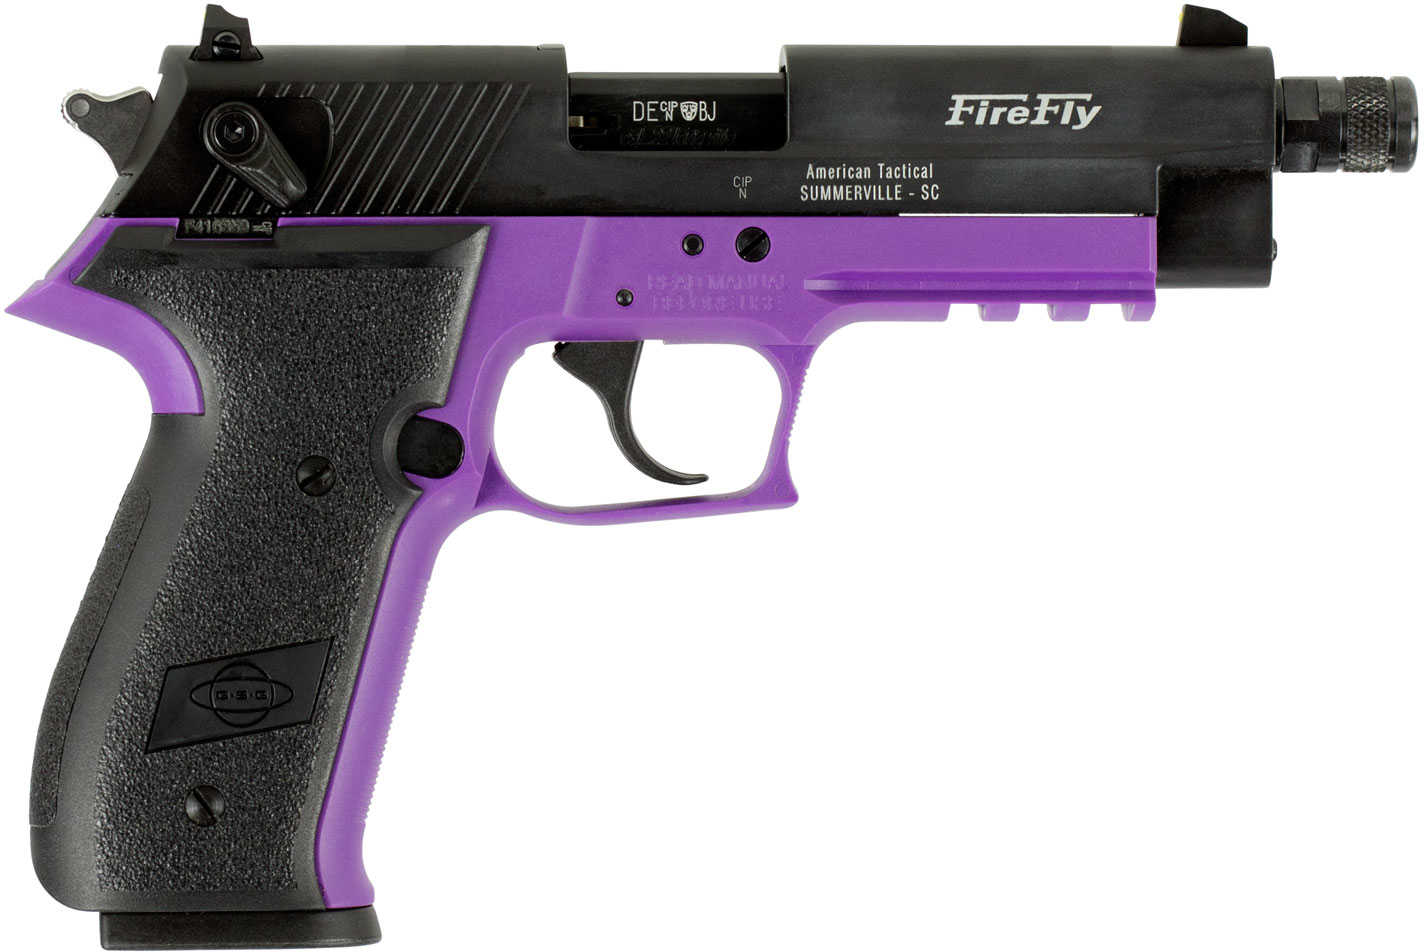 ATI GSG FireFly Semi Automatic Pistol 22 Long Rifle 4.9" Barrel 10 Round Capacity Black Polymer Grip With Purple Frame